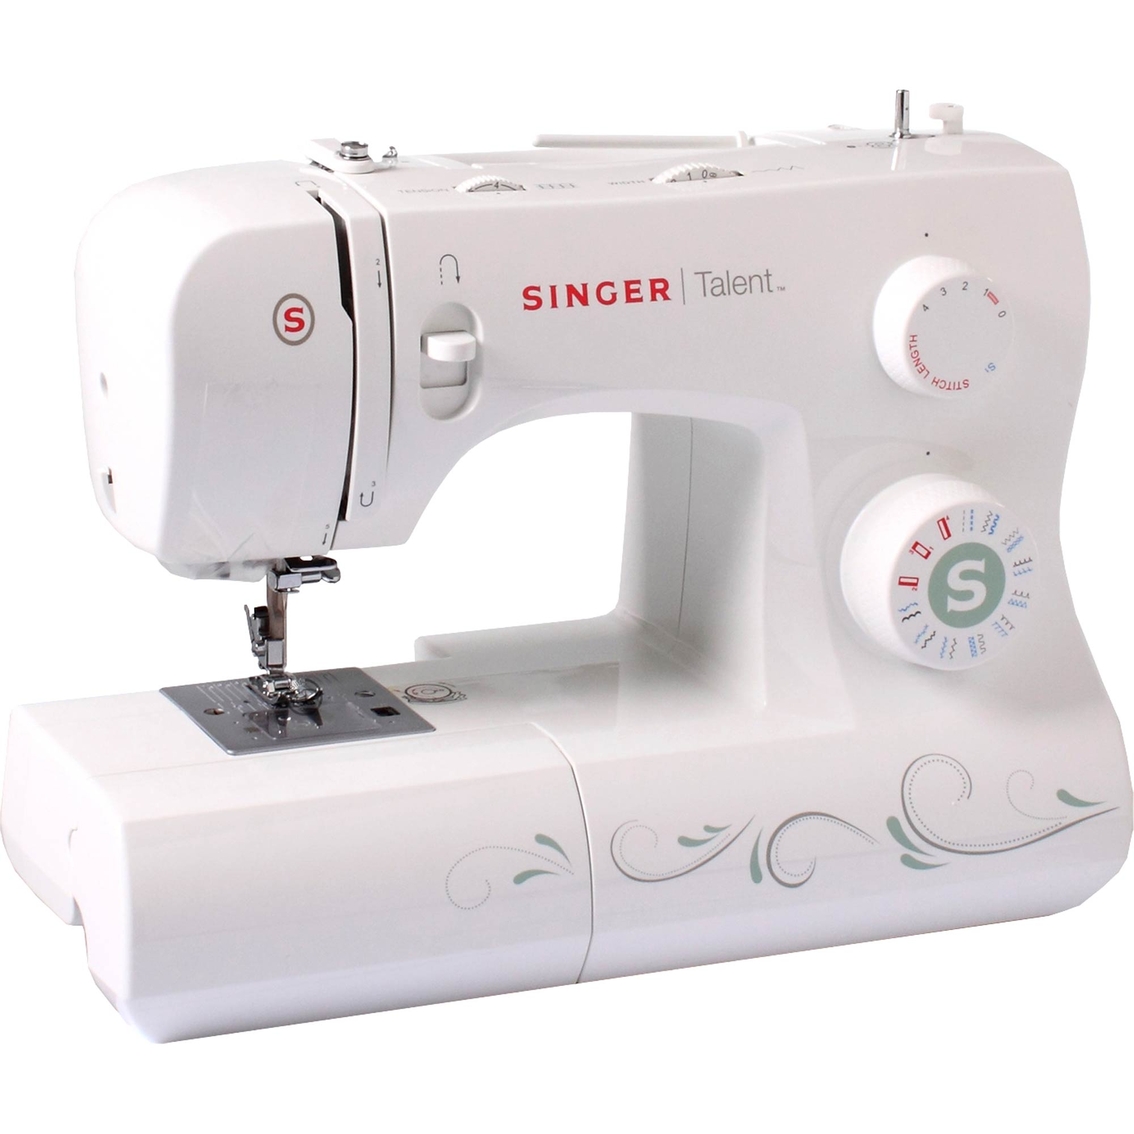 Singer 3321 Talent 21 Stitch Sew Machine, Sewing, Household